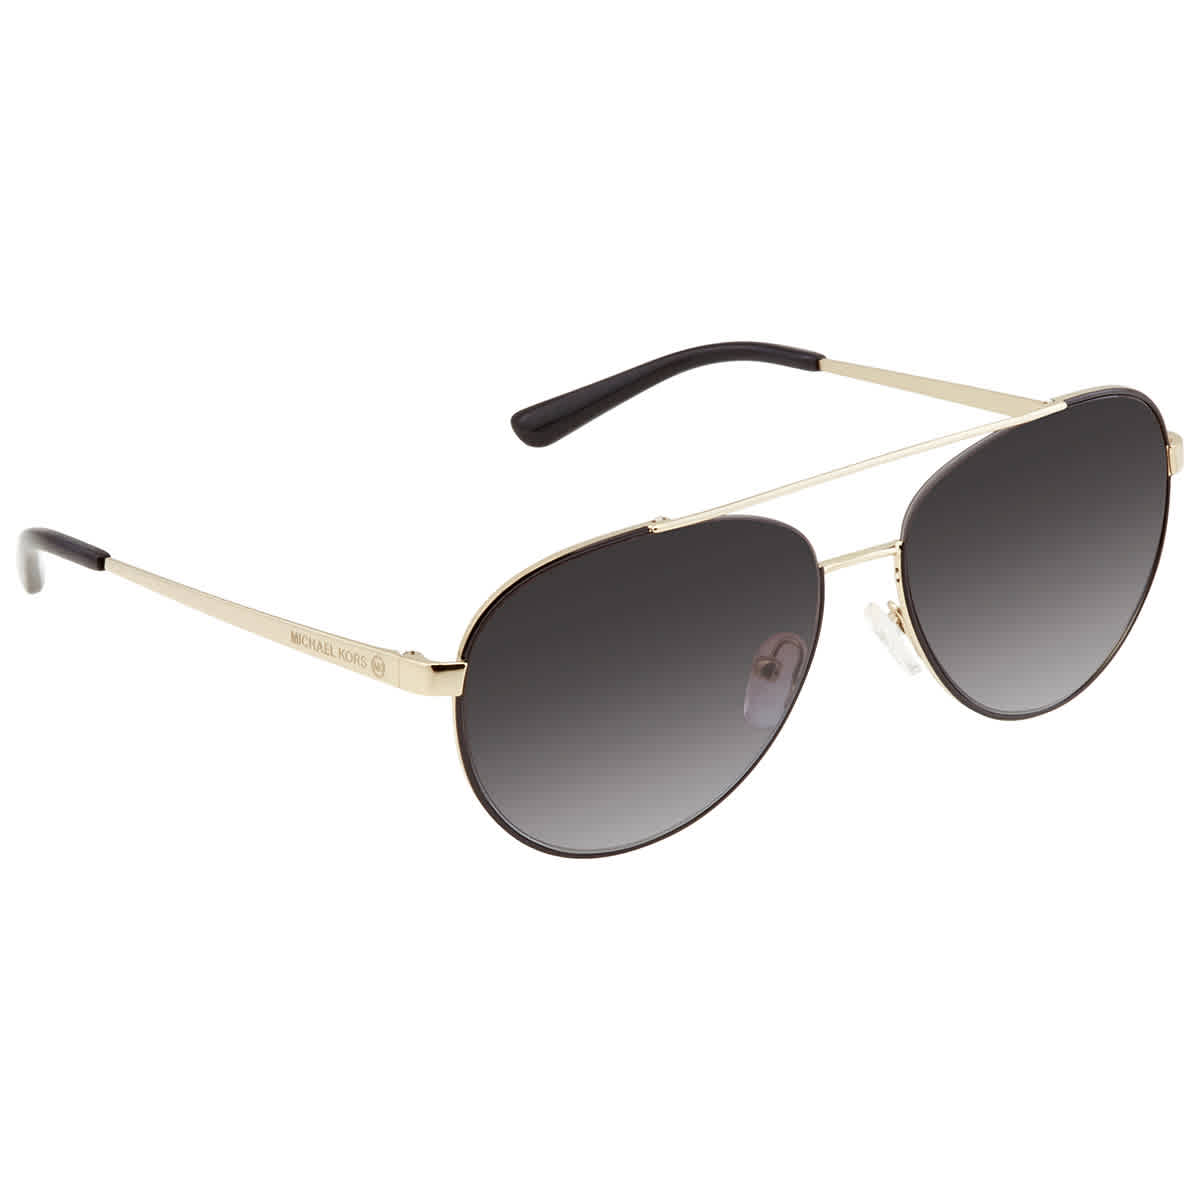 Michael Kors Aventura MK 1071 Metal Womens Aviator Sunglasses Light Gold Black 59mm Adult - image 1 of 3